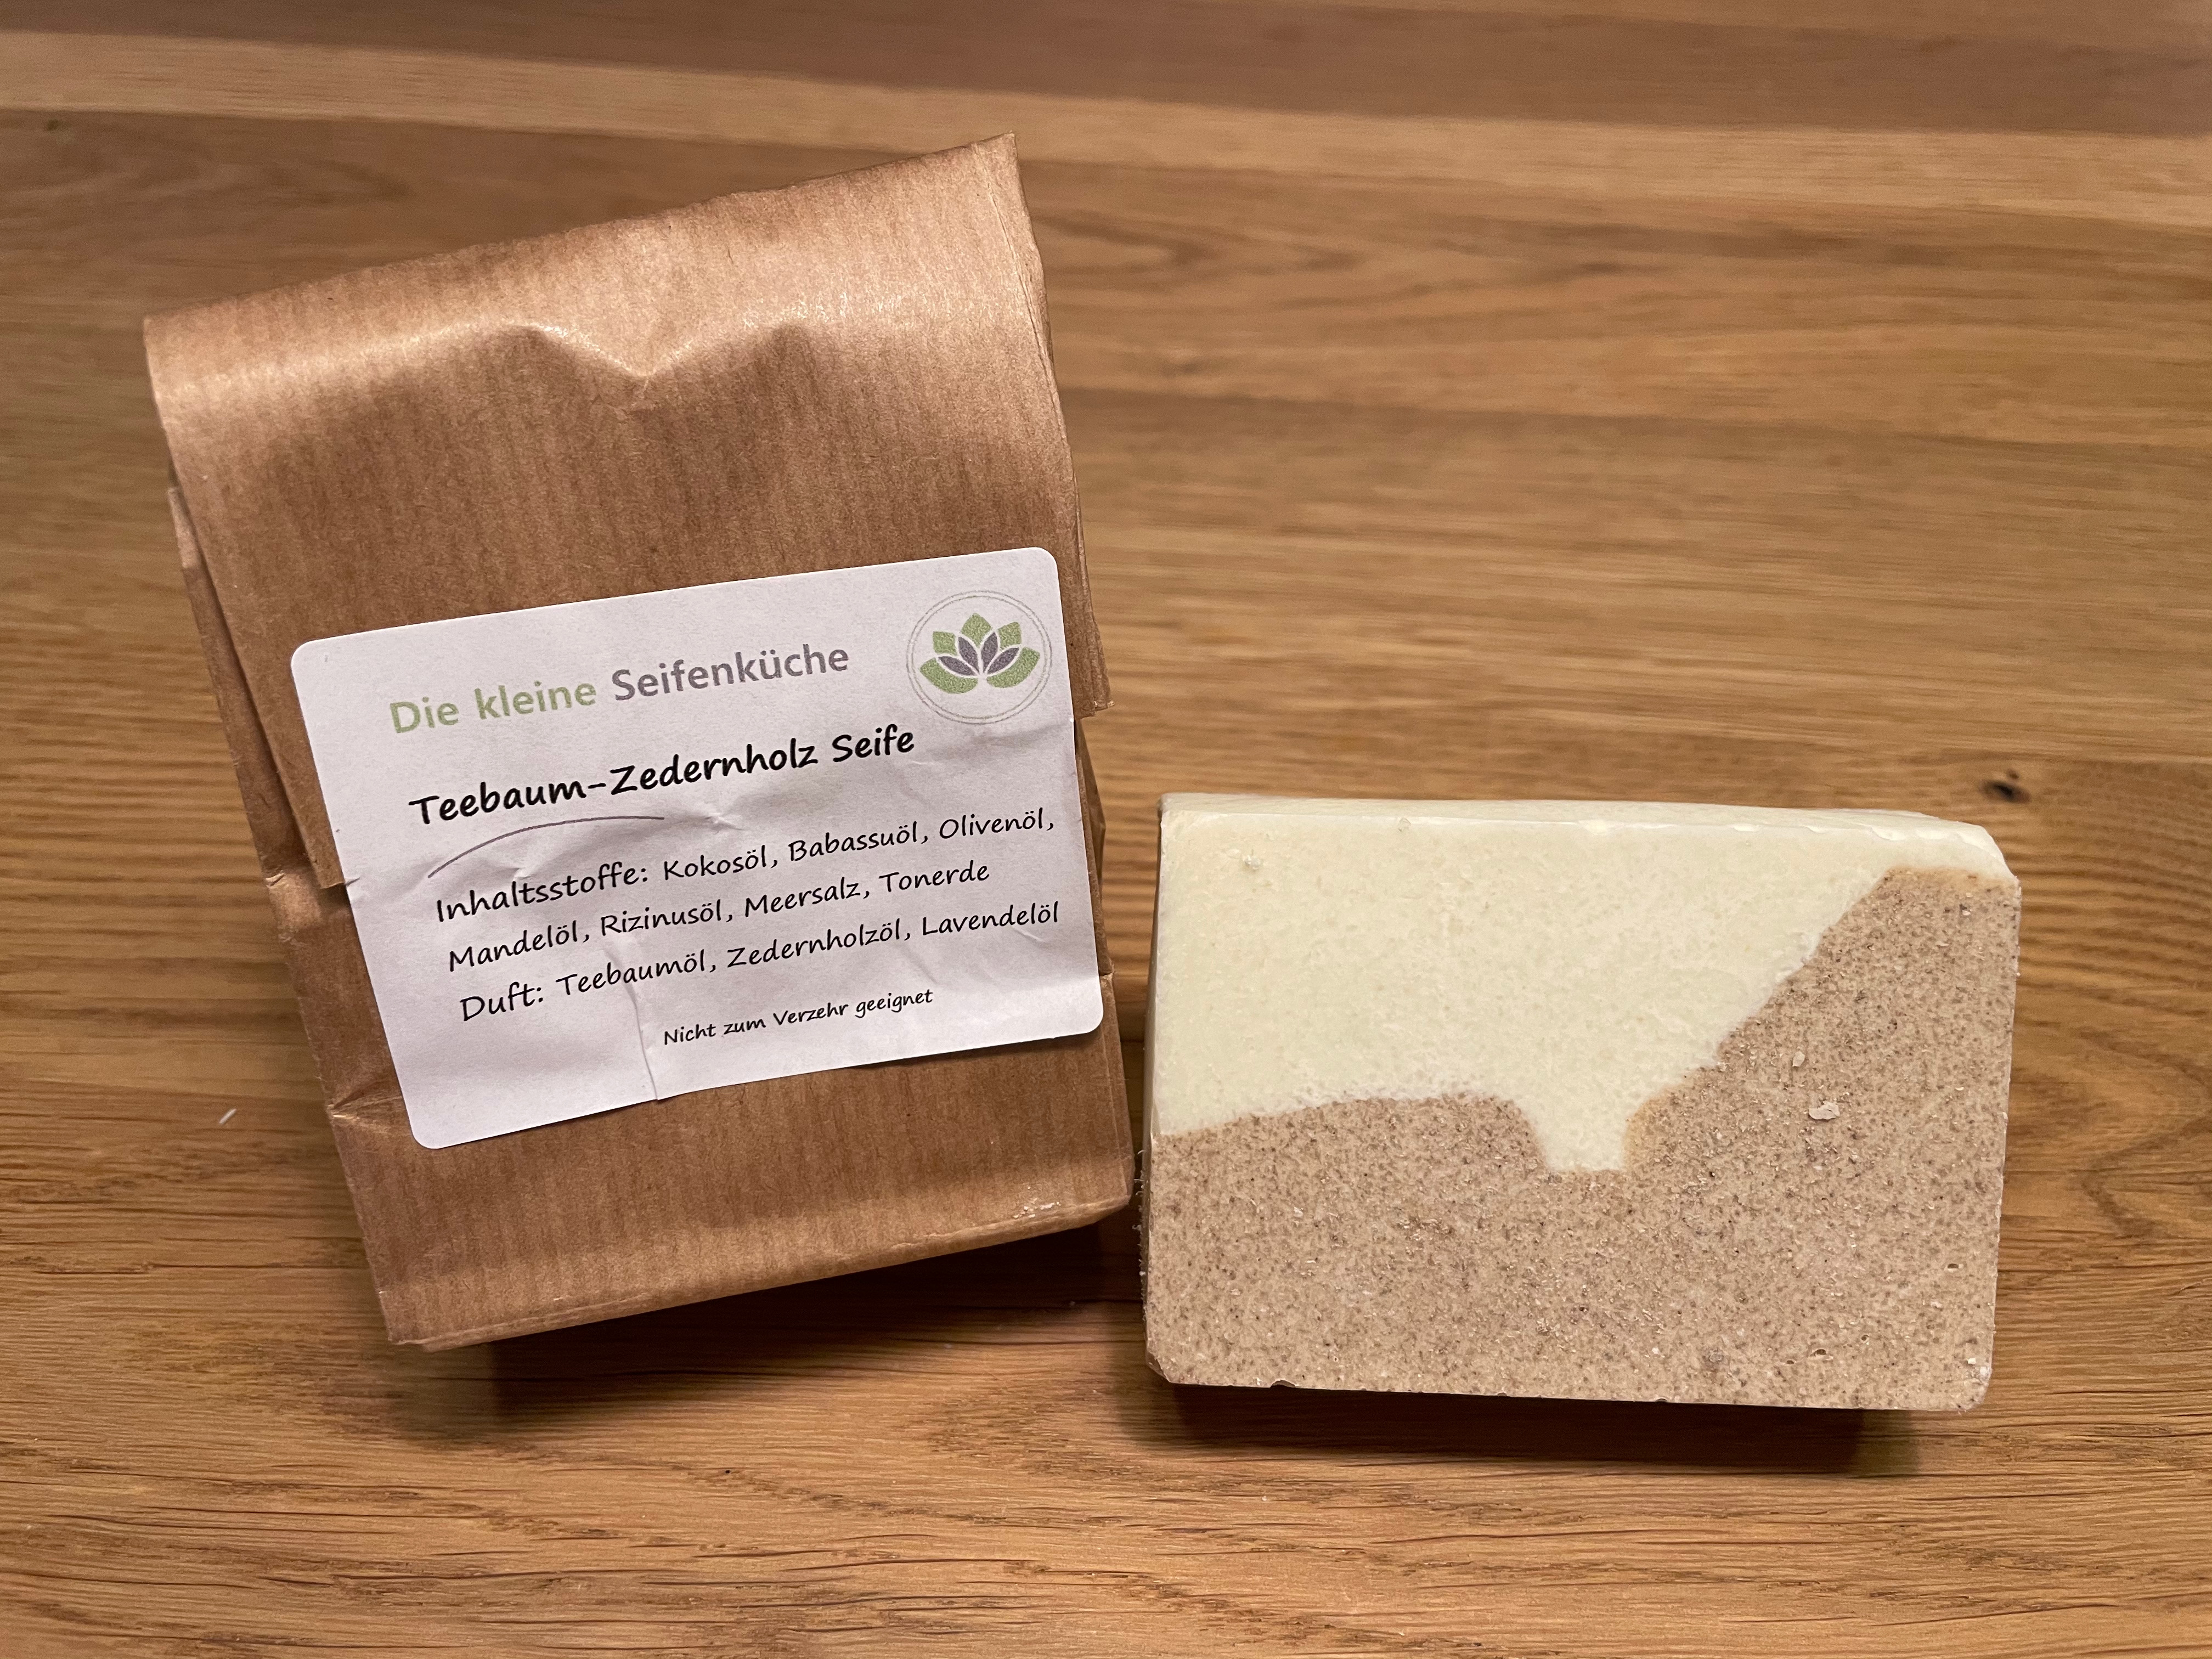 Teebaum-Zedernholz Seife (gegen Pickel bzw. Akne)